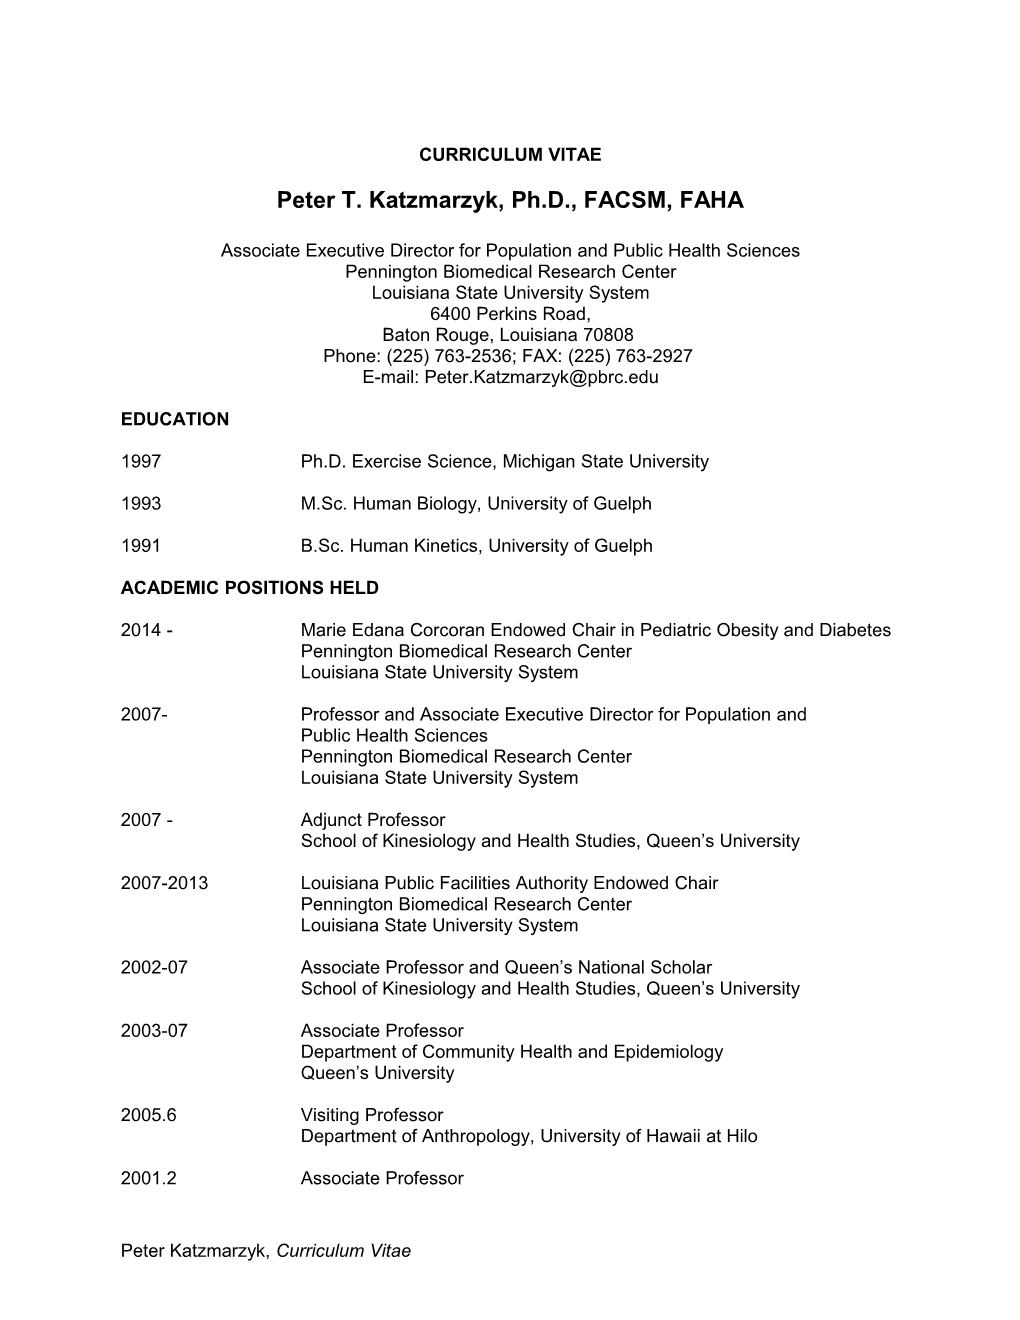 Peter T. Katzmarzyk, Ph.D., FACSM, FAHA